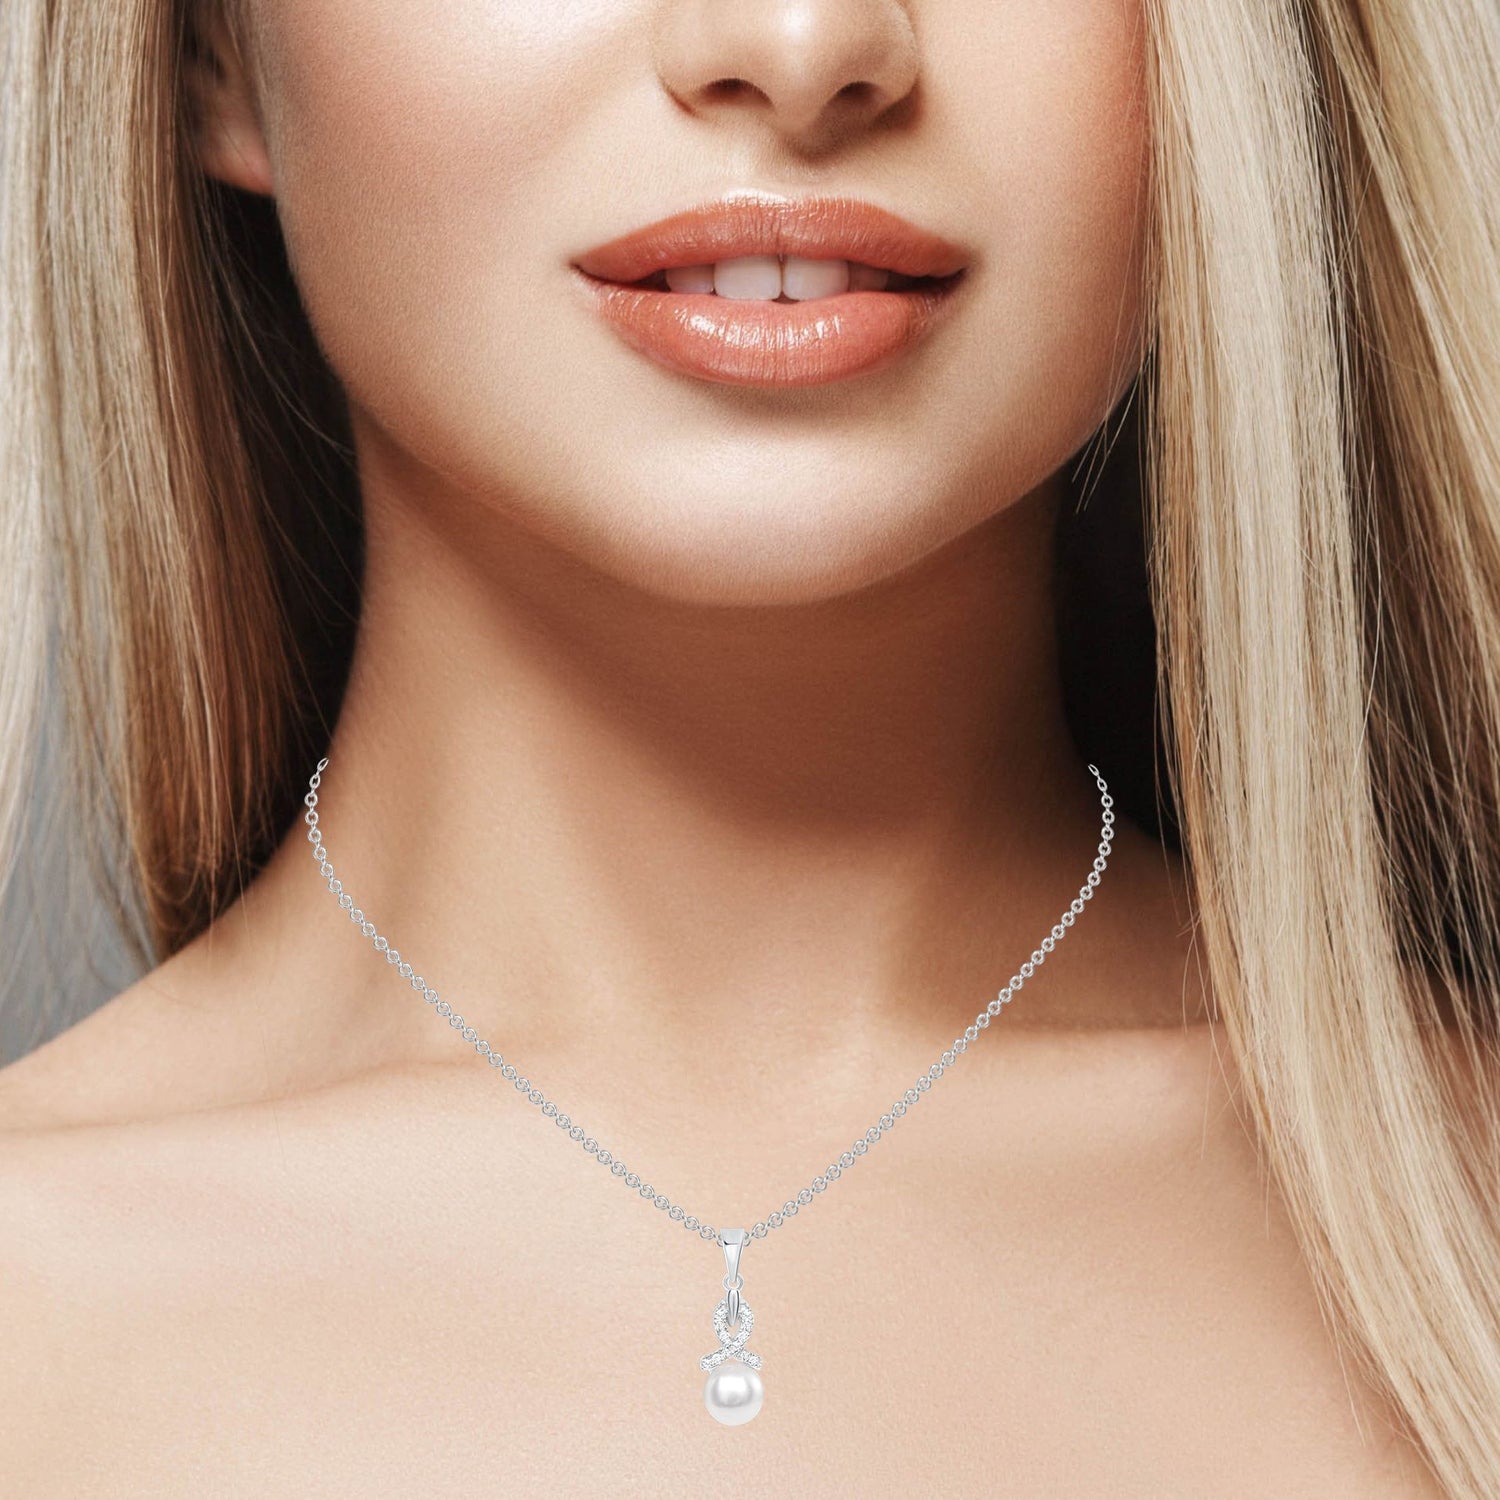 925 Sterling Silver Pearl with CZ Ribbon Teardrop Pendant &amp; Earrings Jewelry Set